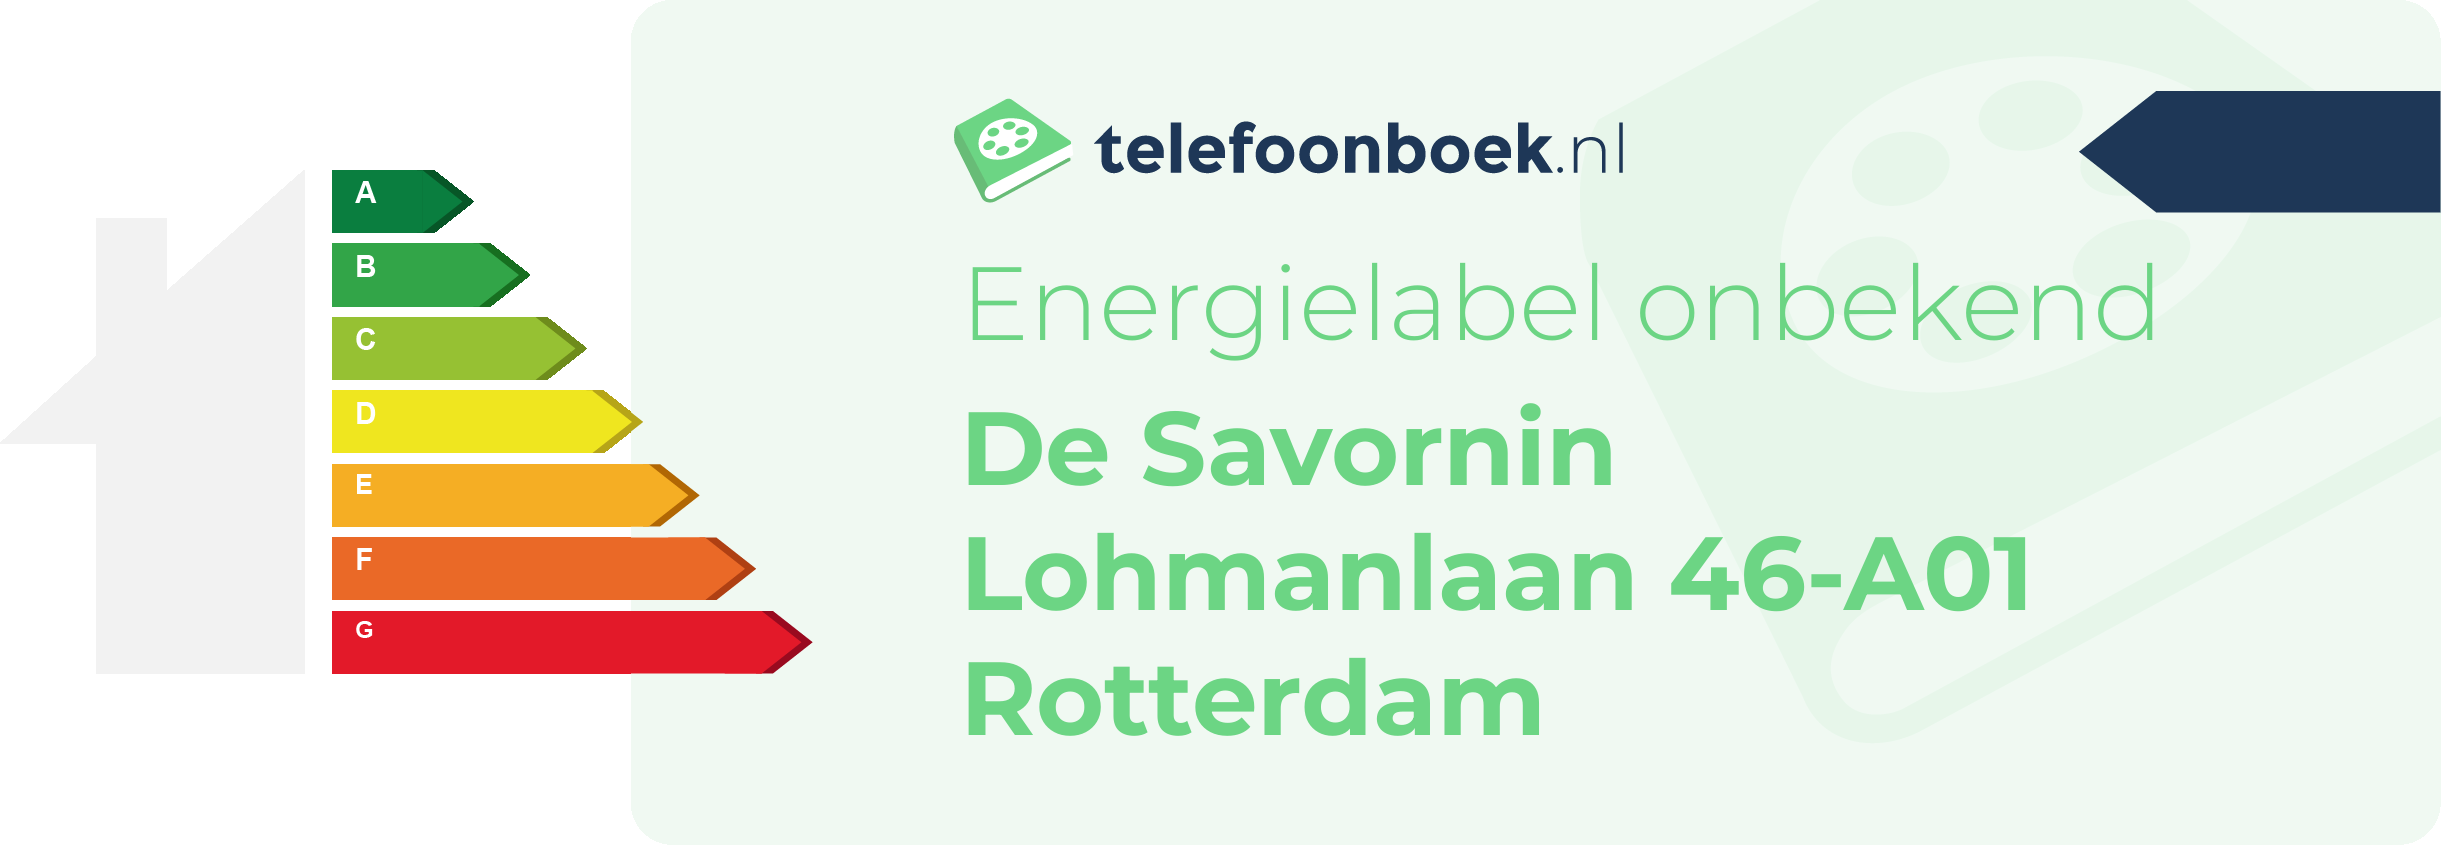 Energielabel De Savornin Lohmanlaan 46-A01 Rotterdam